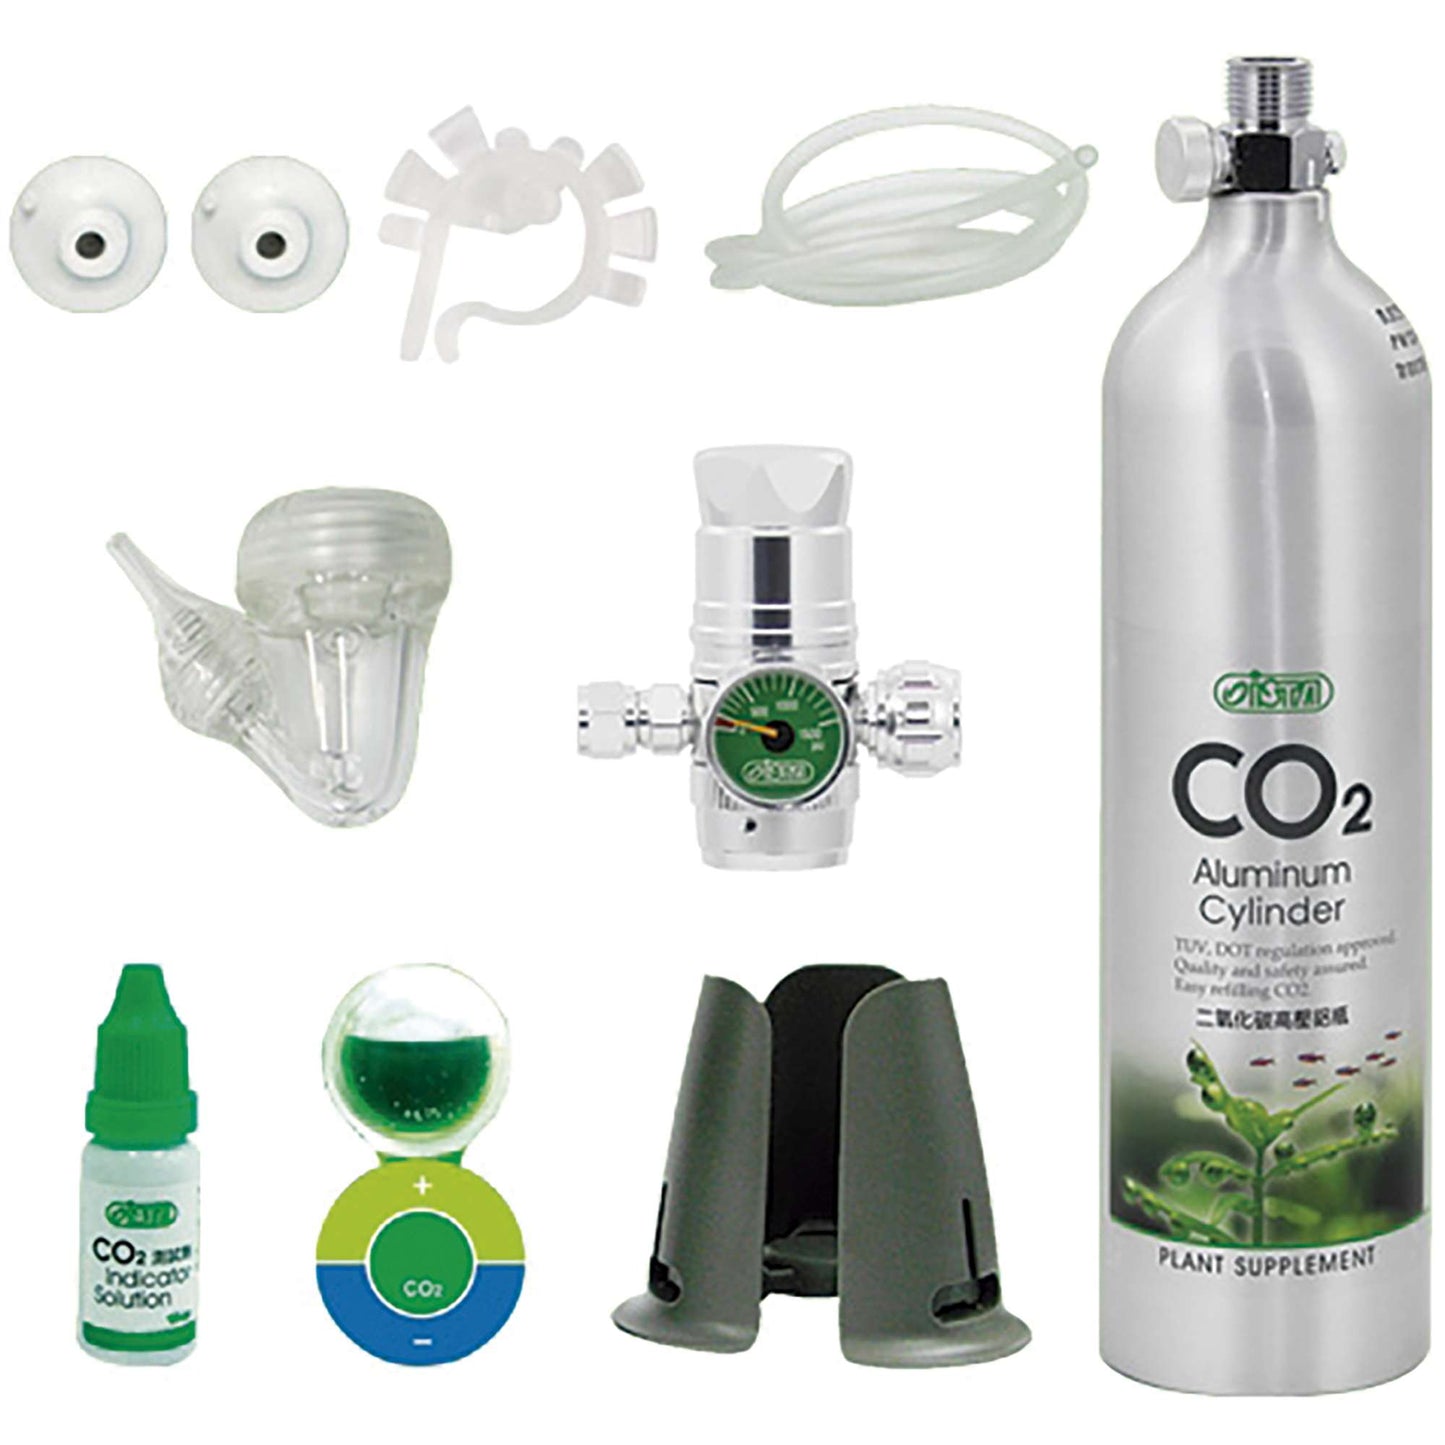 Kit de CO2 con cilindro de aluminio